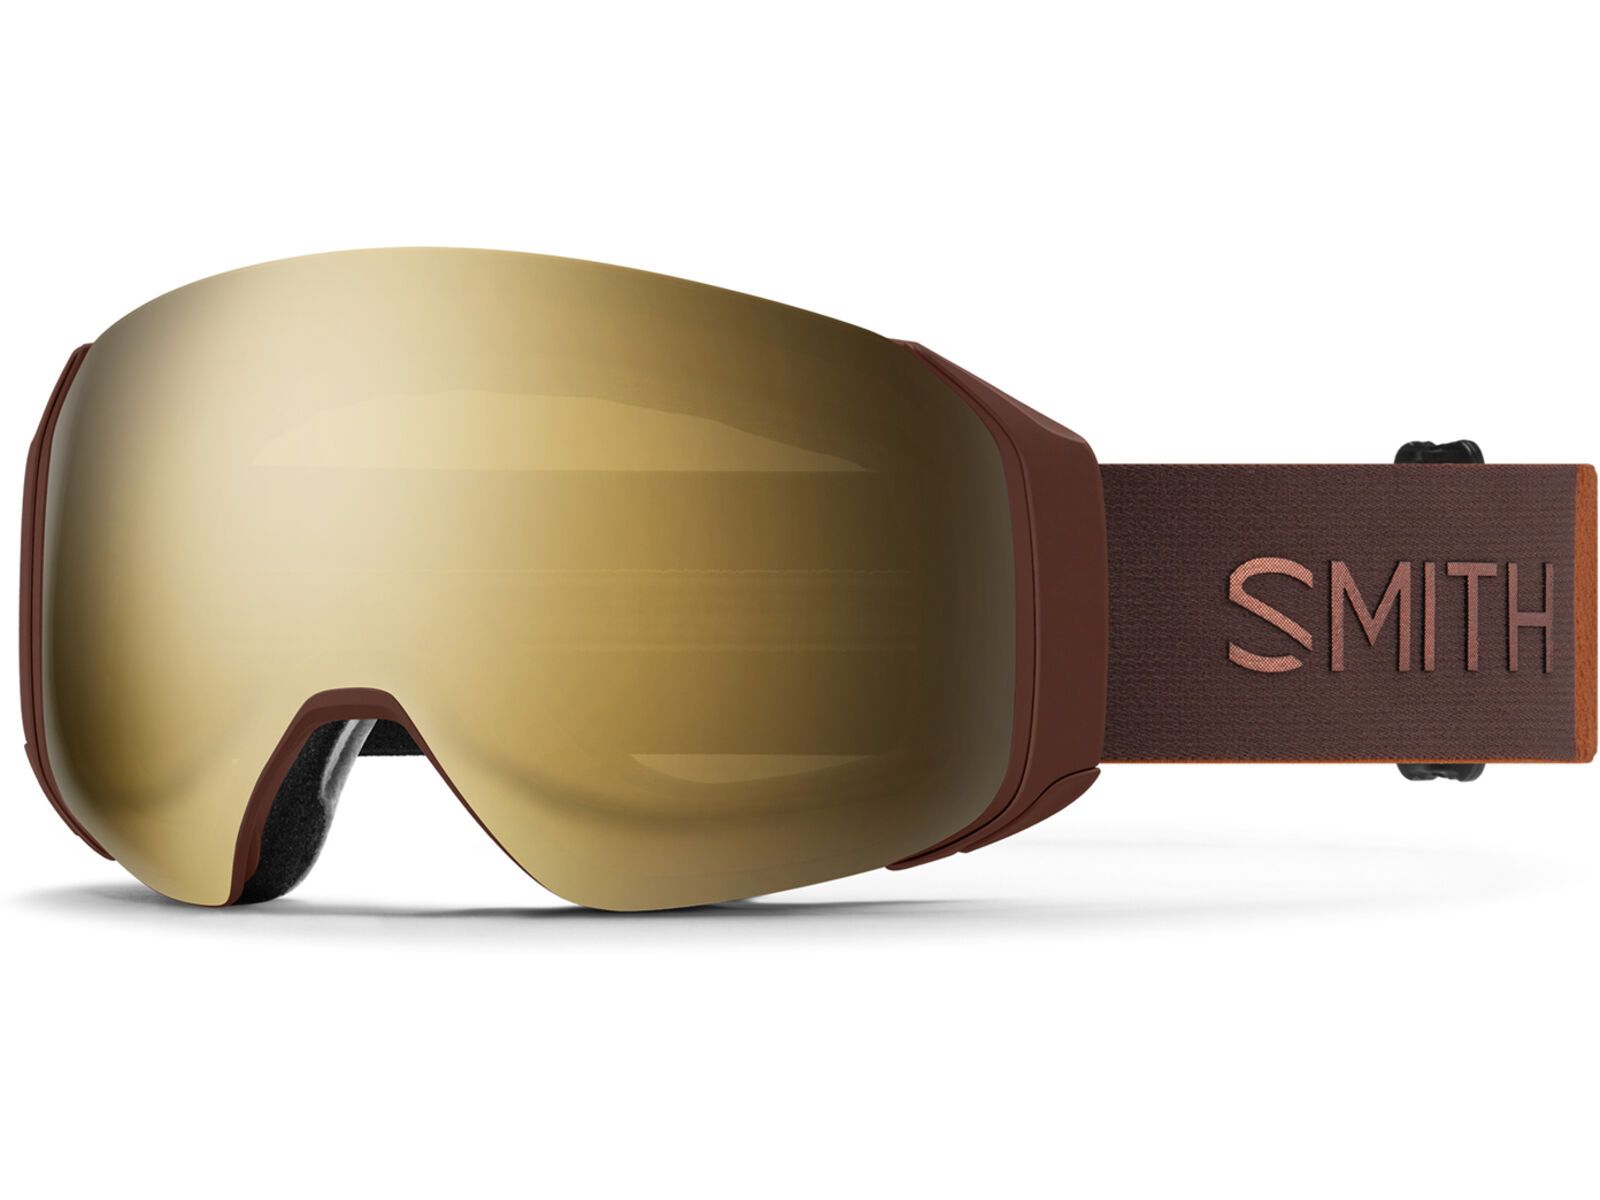 Smith 4D Mag S - ChromaPop Sun Black Gold Mir + WS, sepia luxe | Bild 1